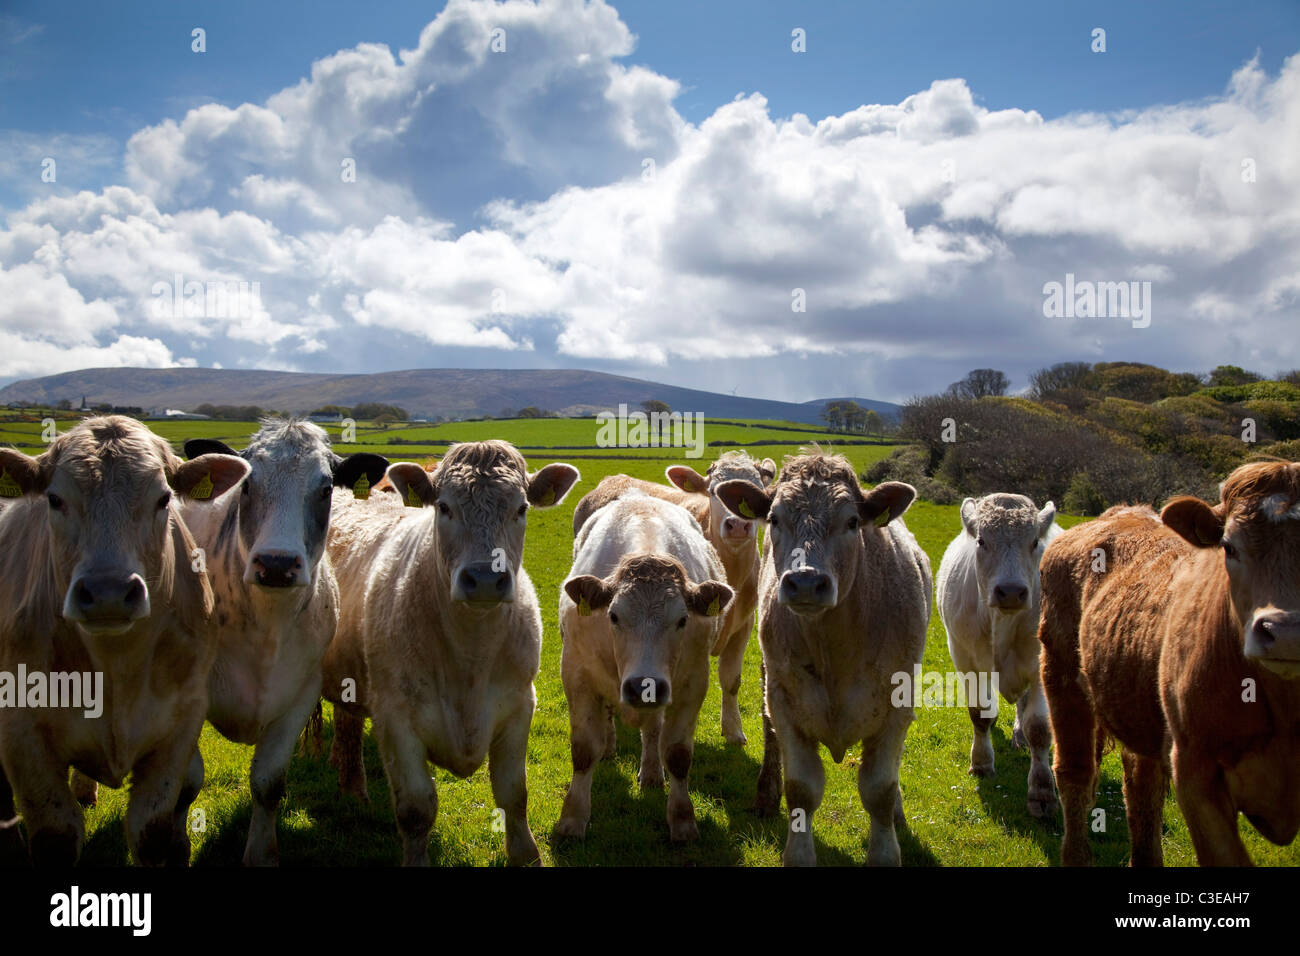 Herd of curious Charolais cattle in a field, County Sligo, Ireland. Stock Photo